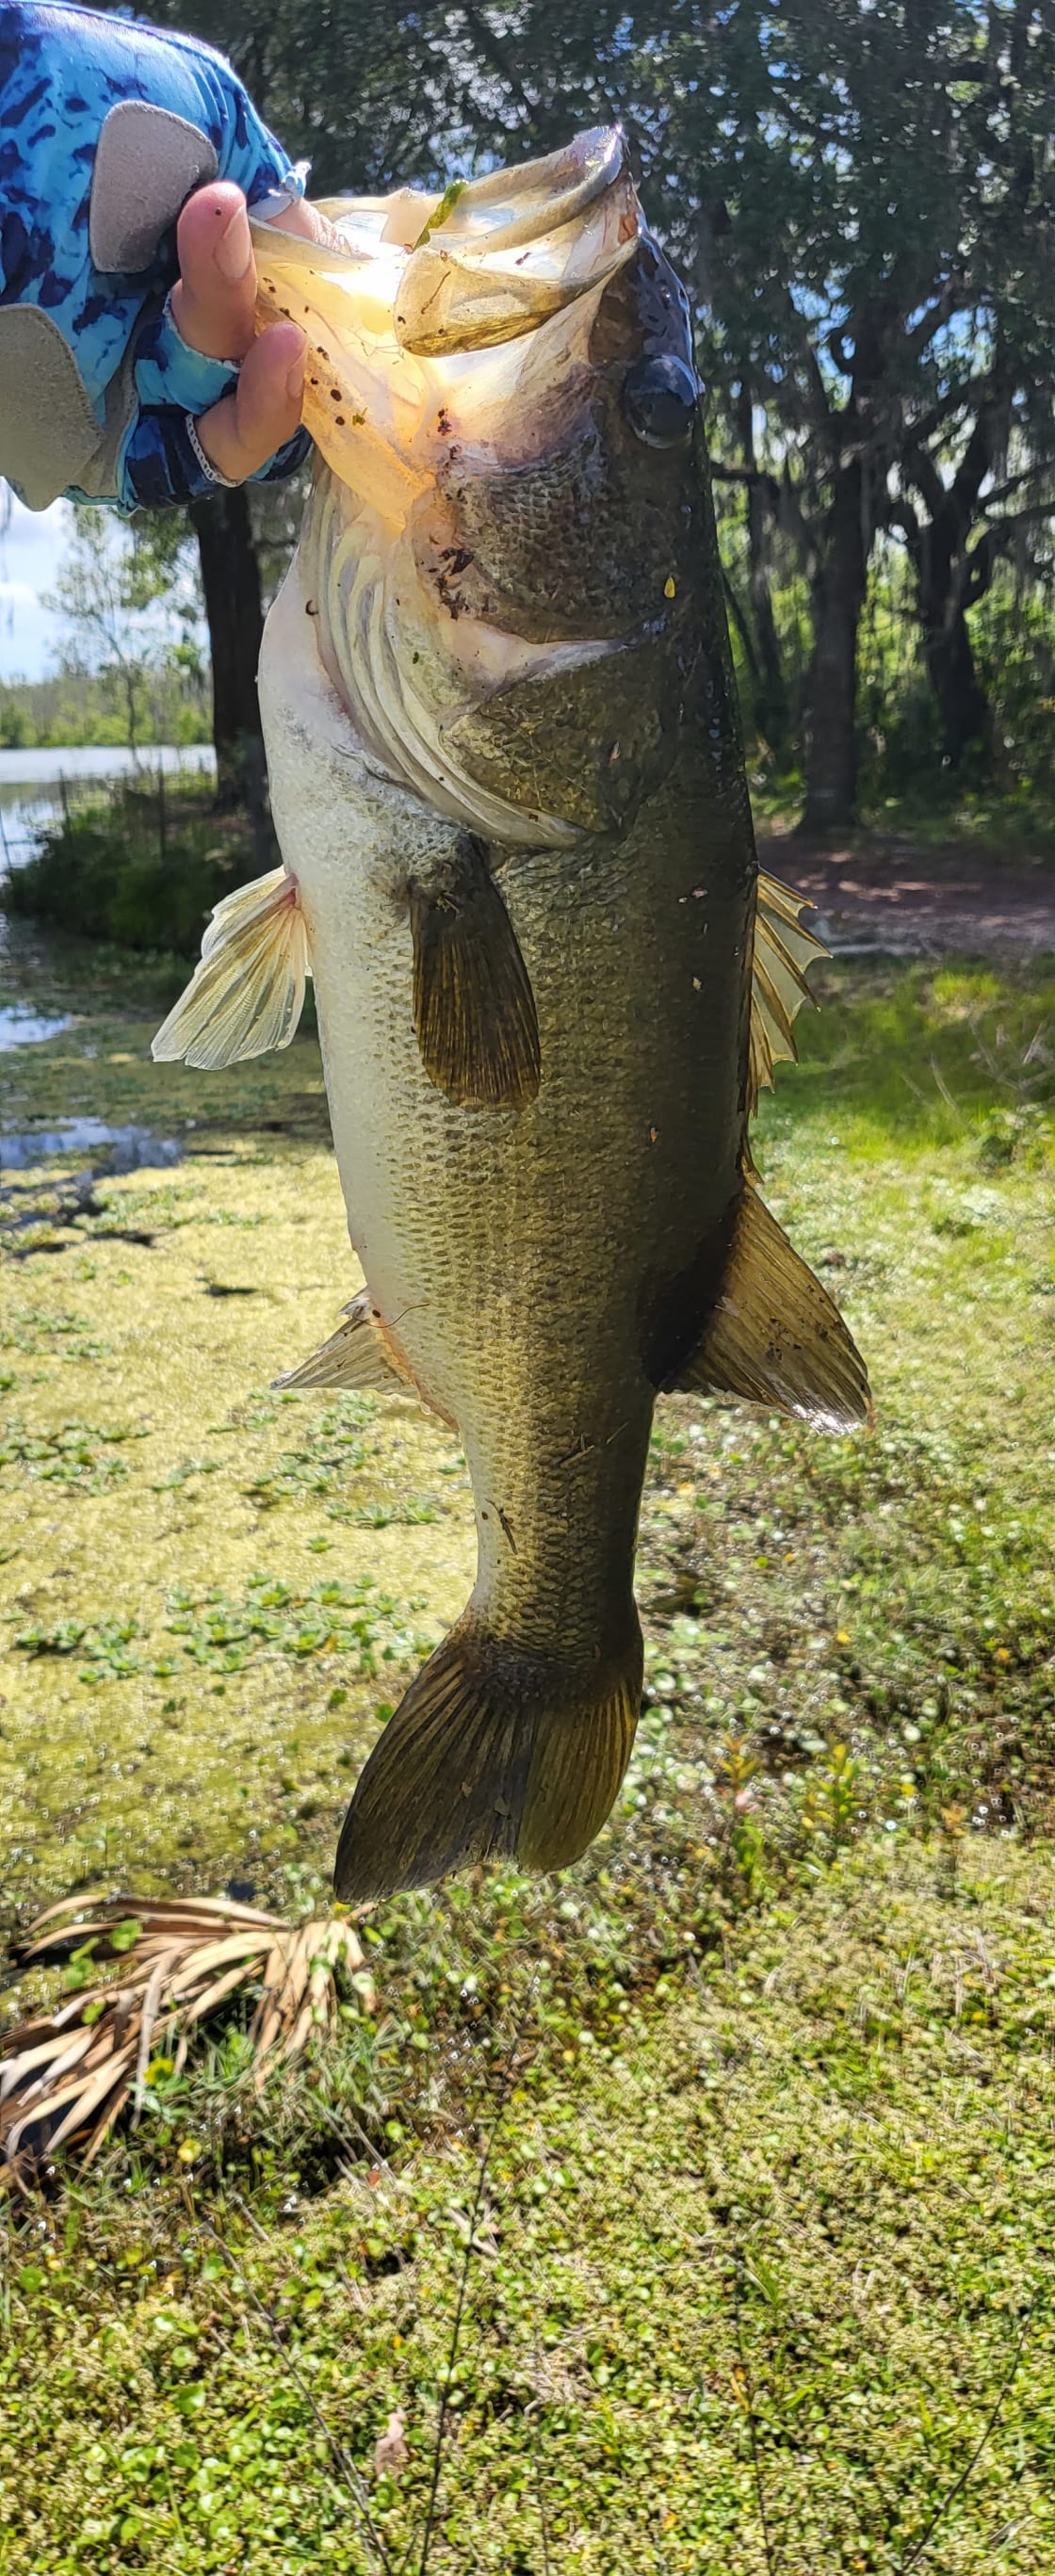 Great bass fishing! 